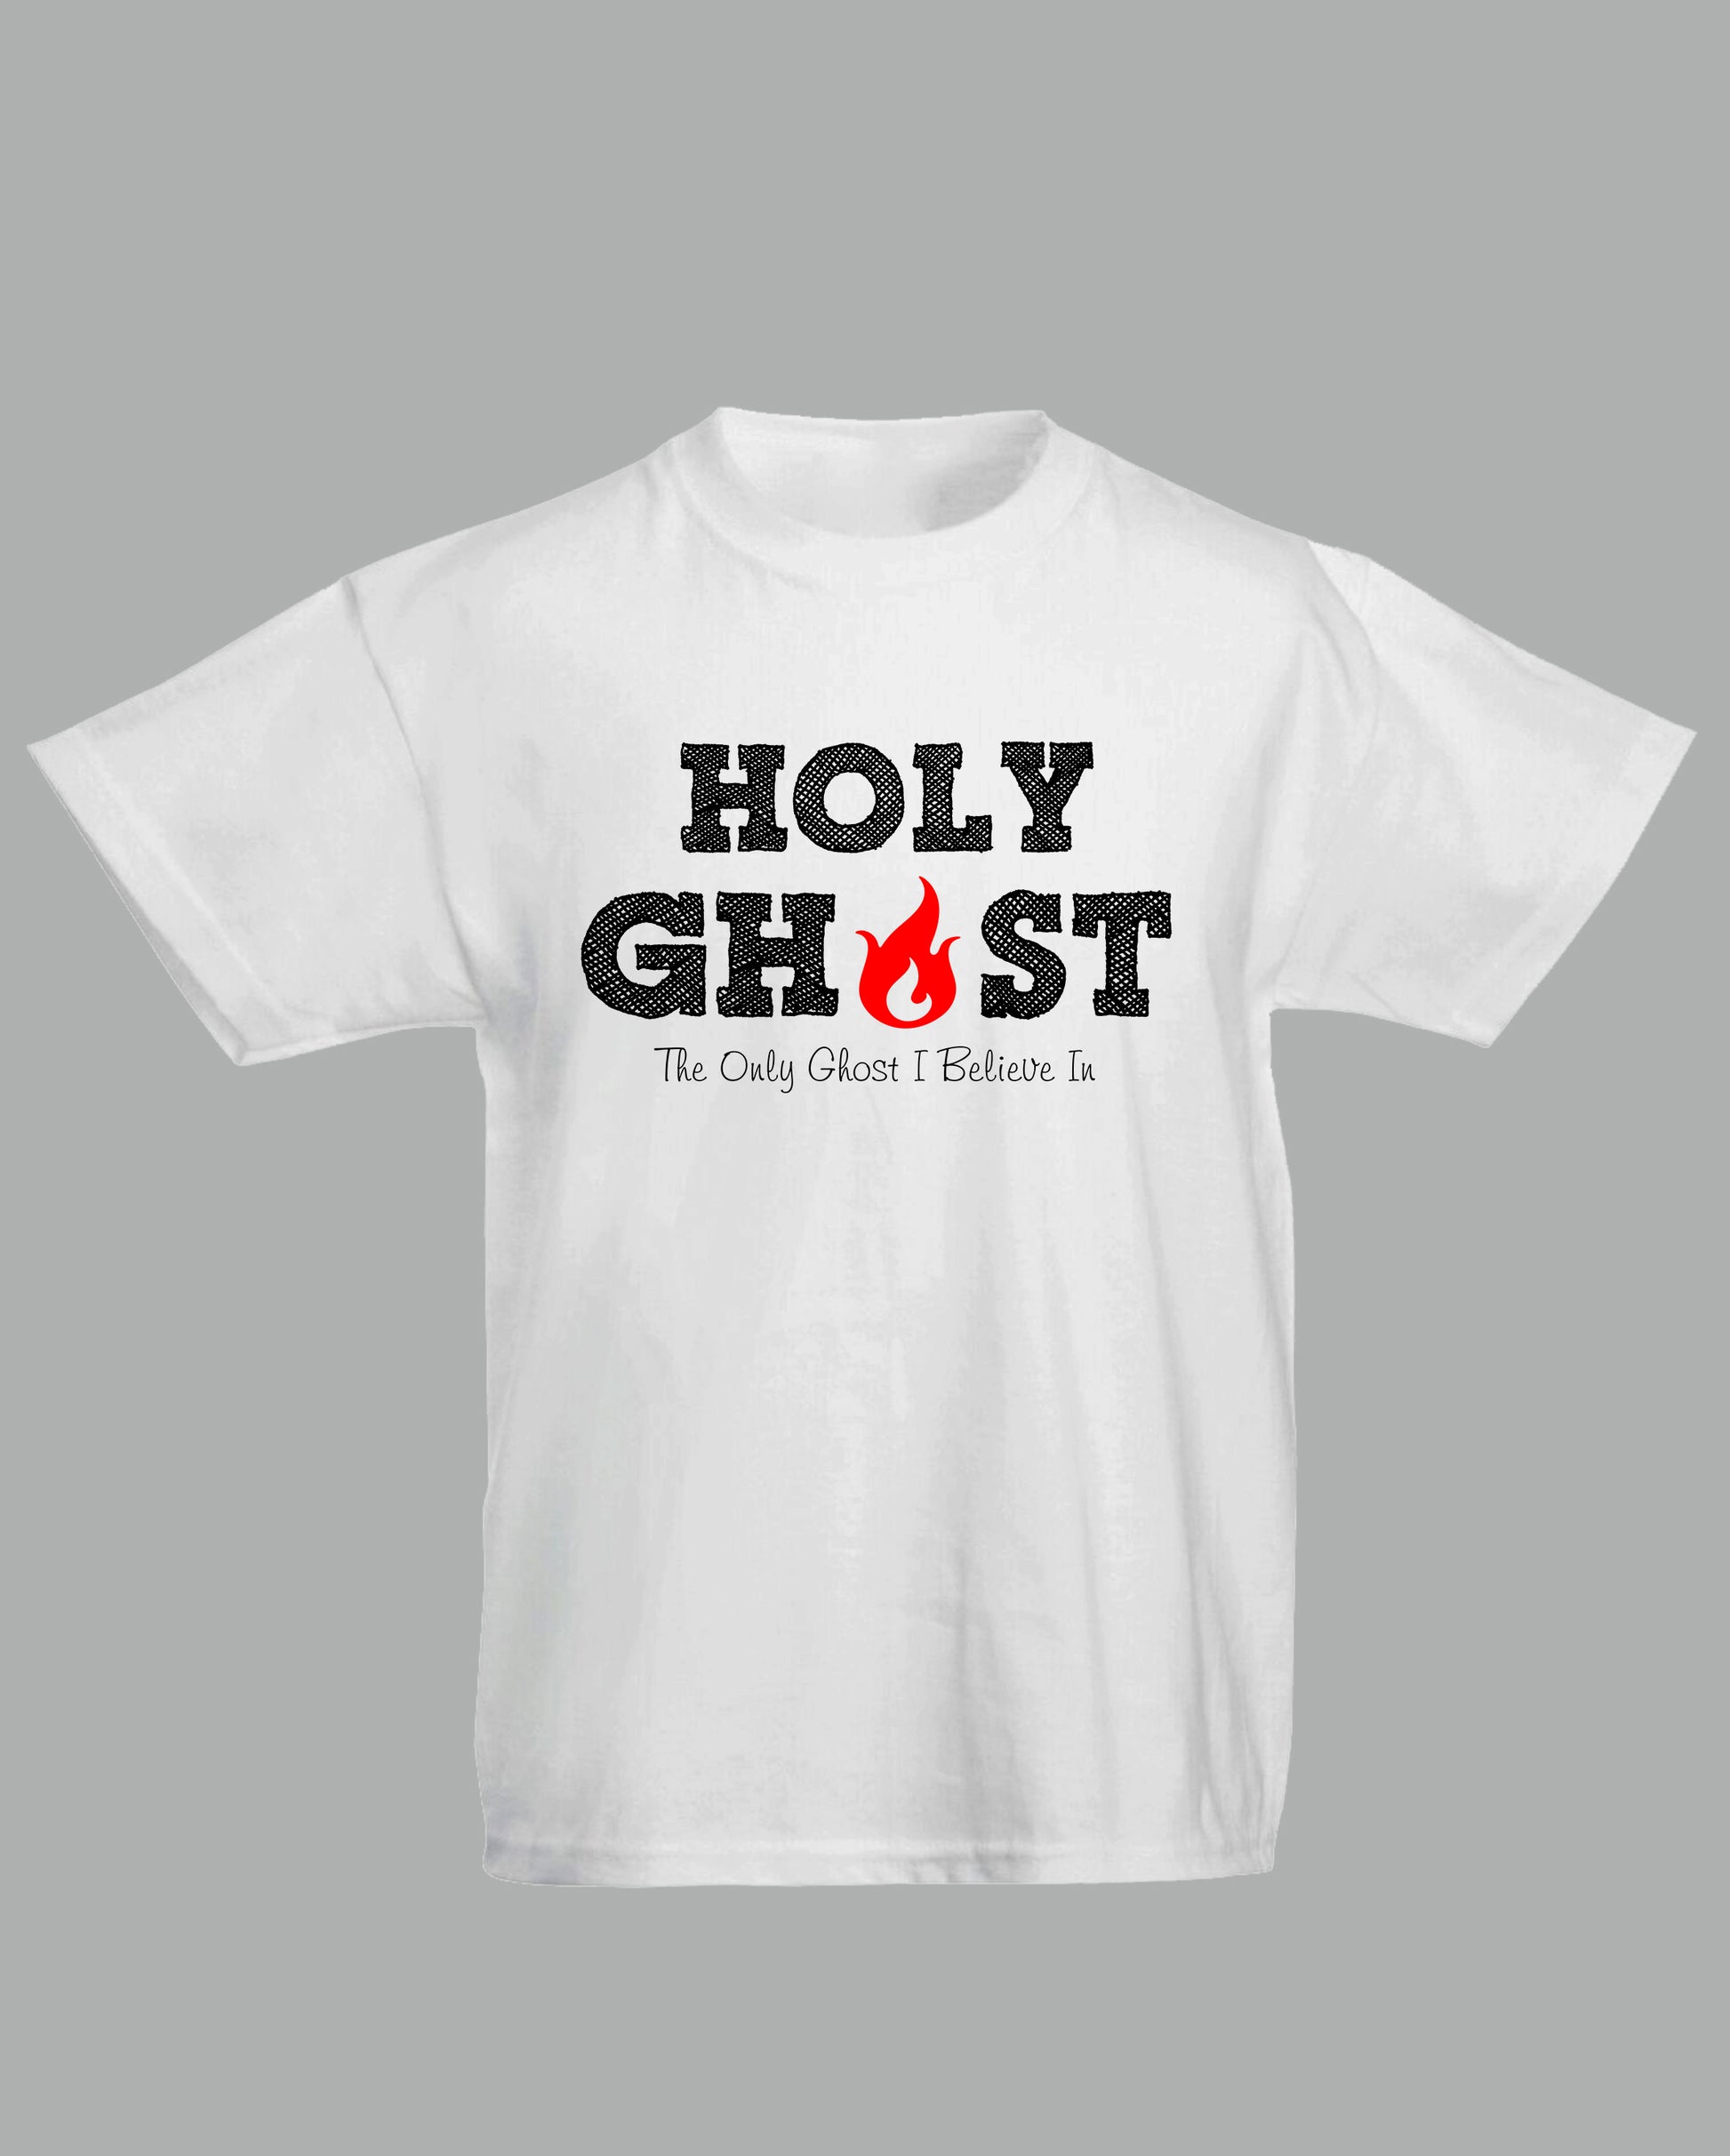 Halloween Christian T Shirts Holy Ghost Gift Kids White T-Shirt